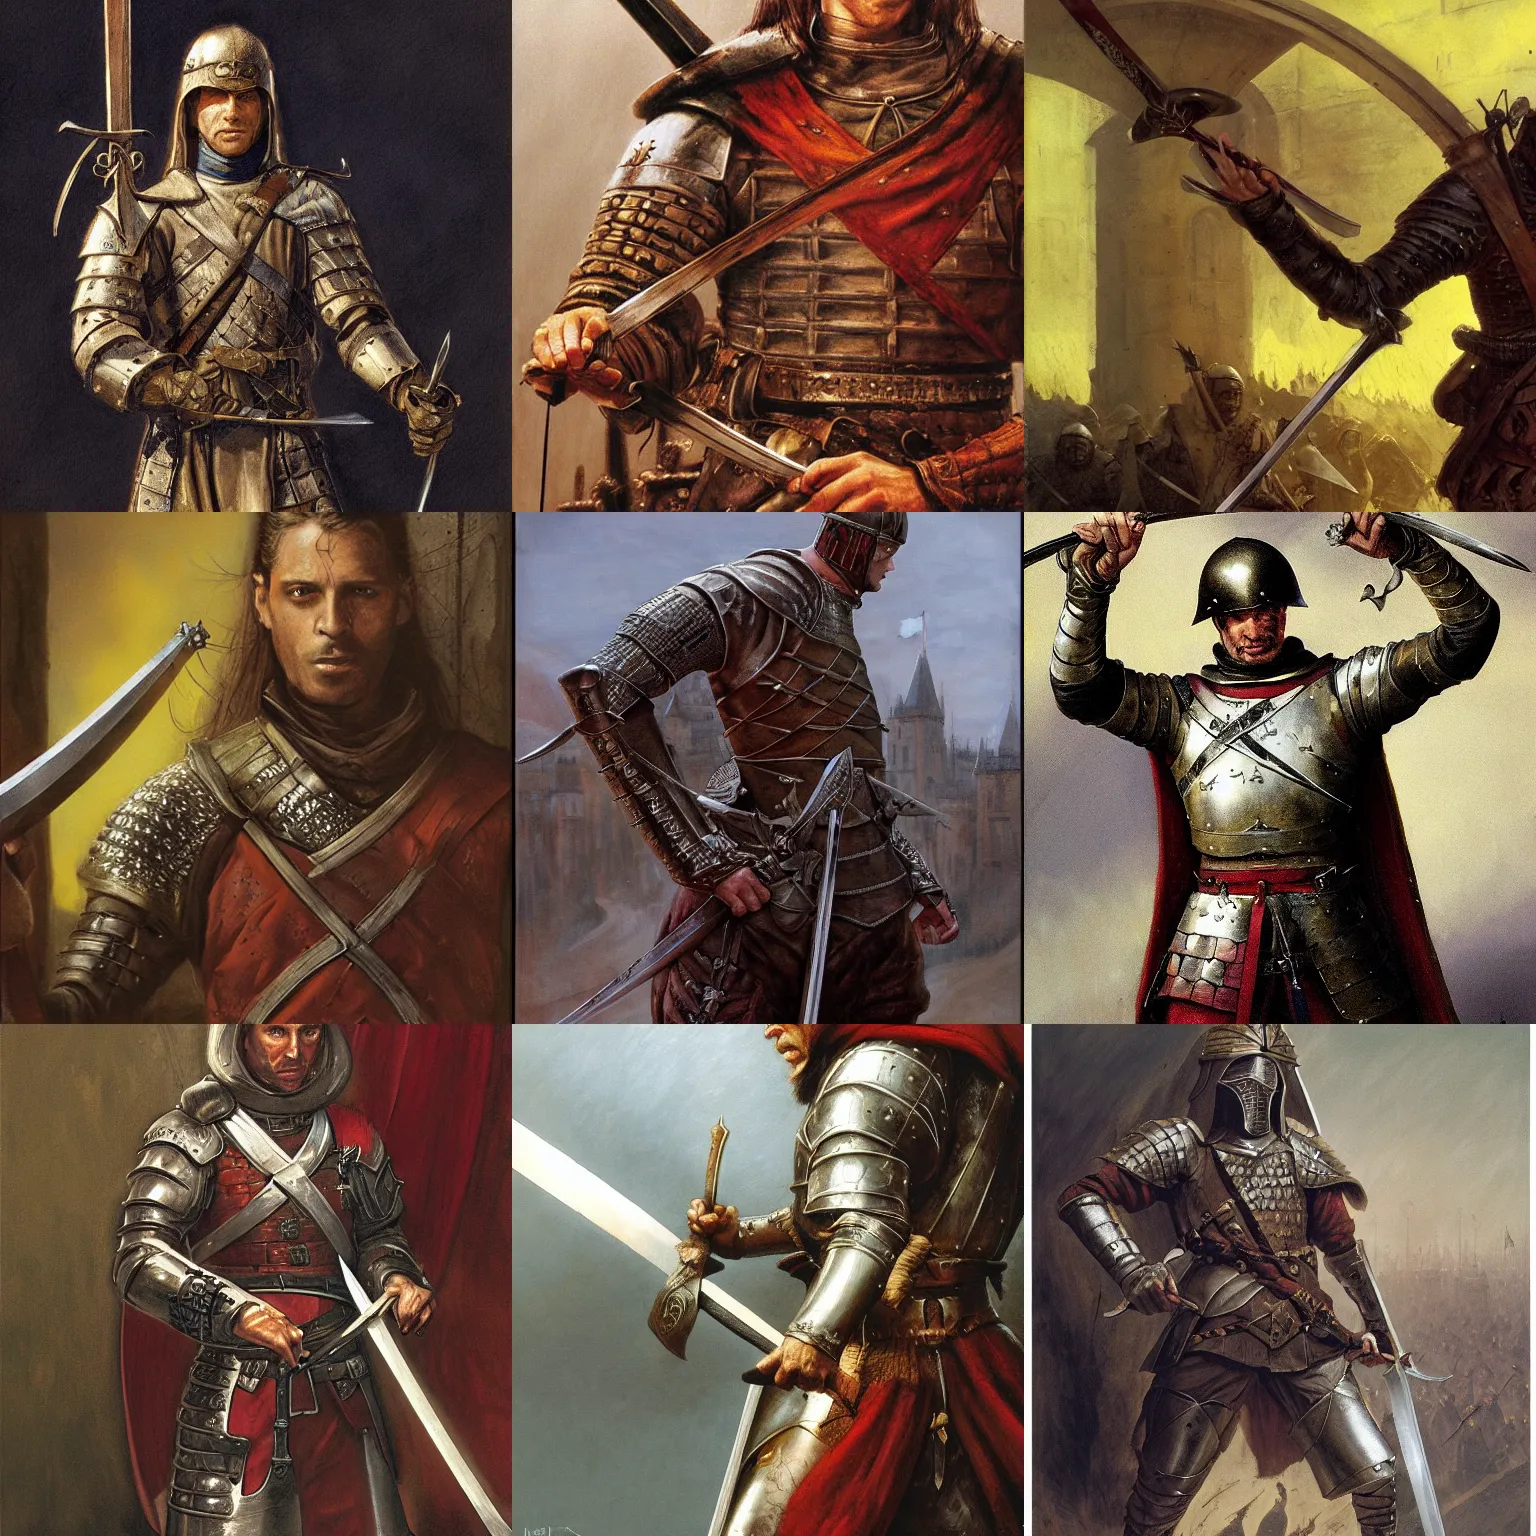 Prompt: medieval soldier holding sword with two hands, close - up, mtg, d & d, rutkowski, john howe, aleksi briclot